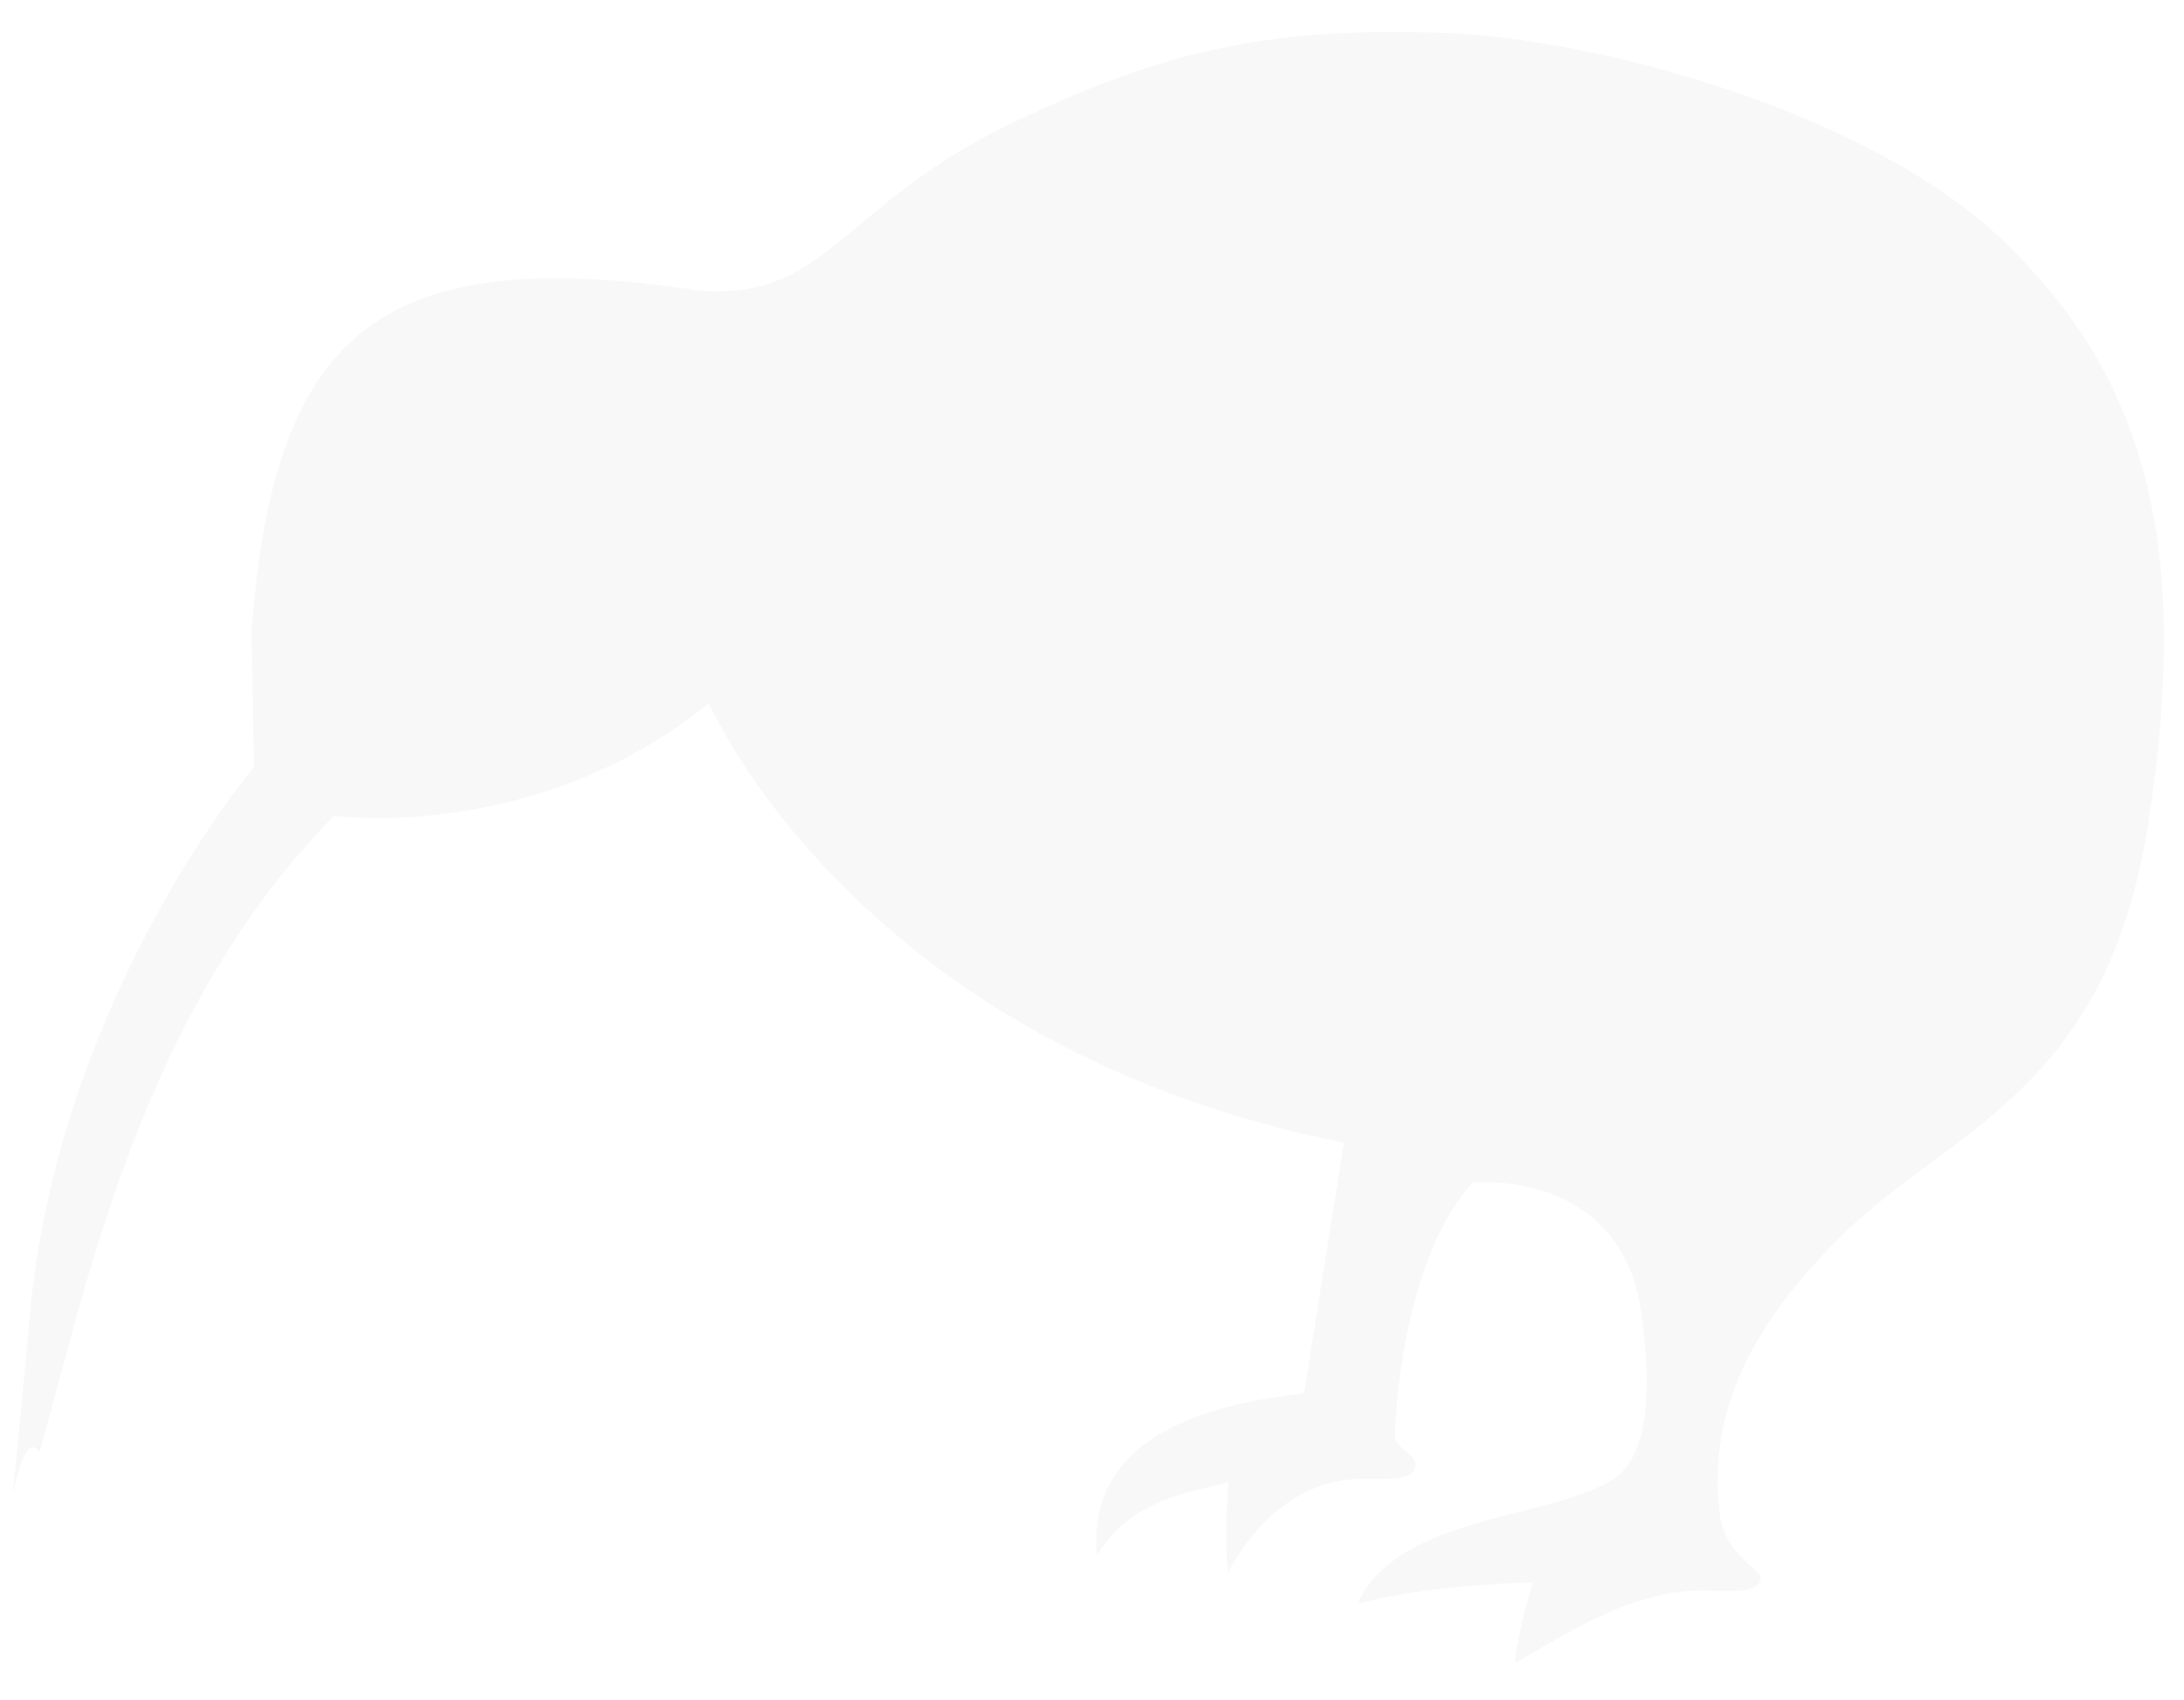 Kiwi Bird Drawing